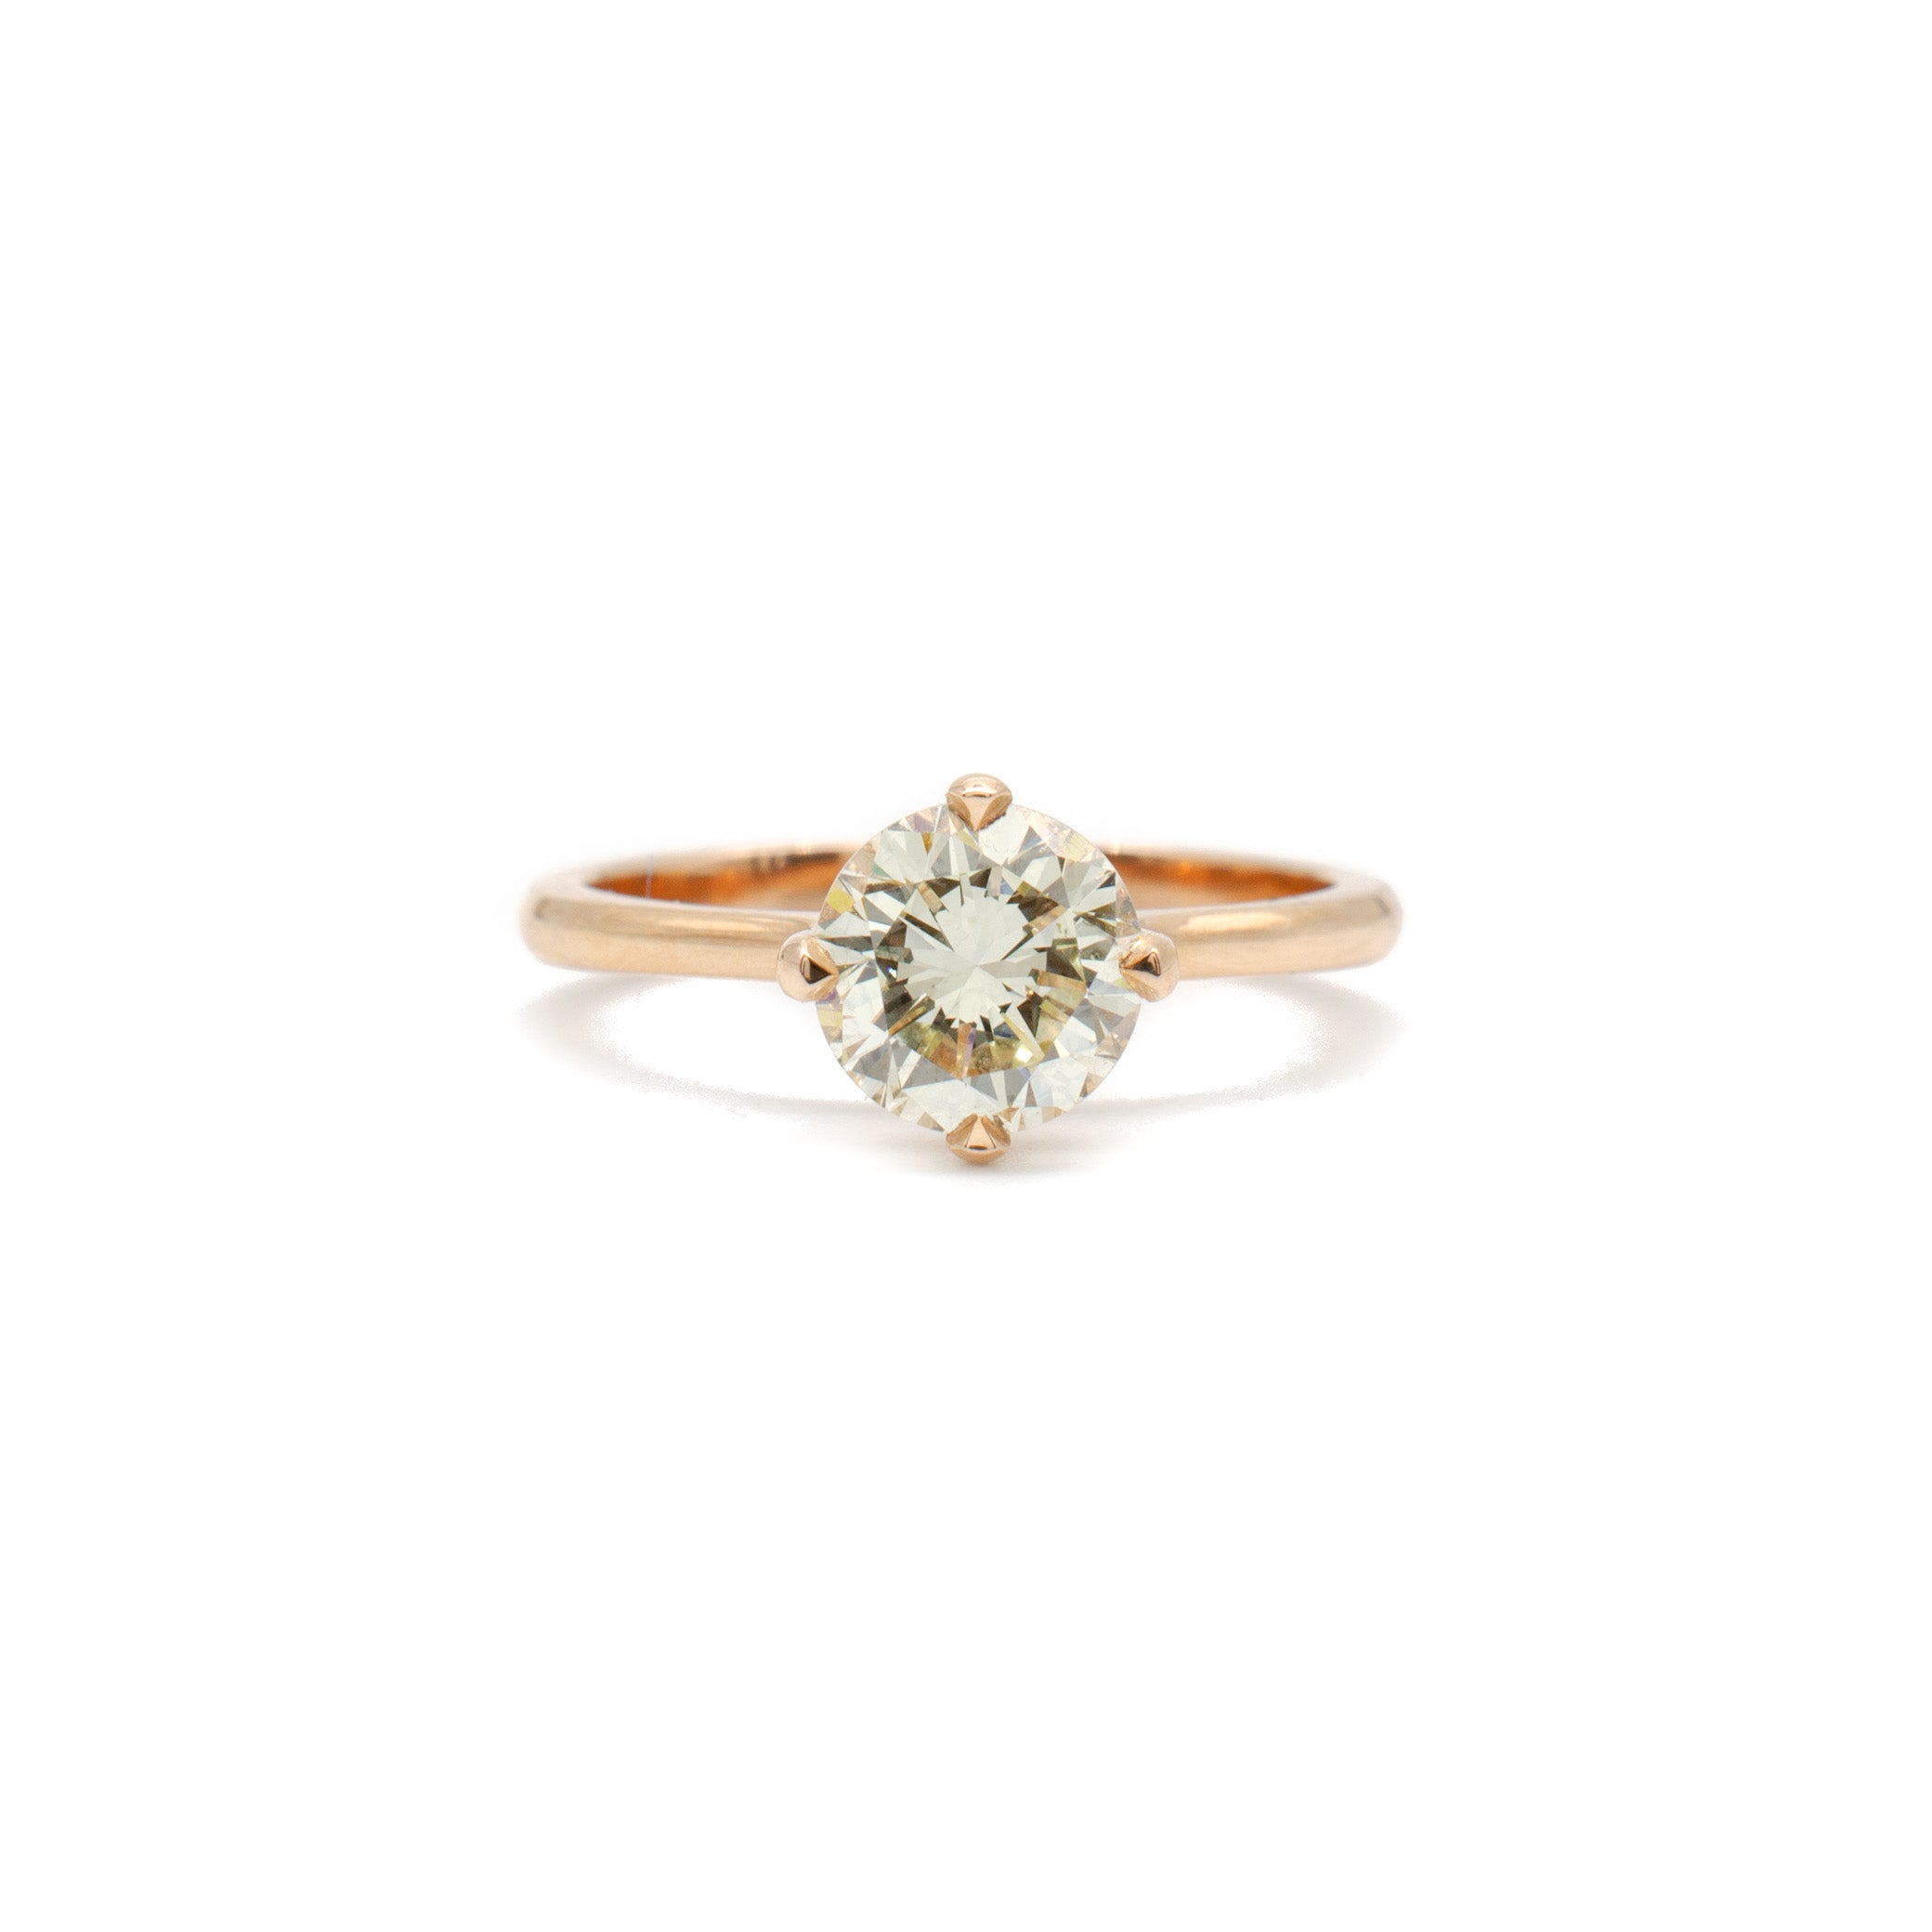 J Albrecht Designs Master Goldsmiths Diamond Solitaire Ring In Rose Gold